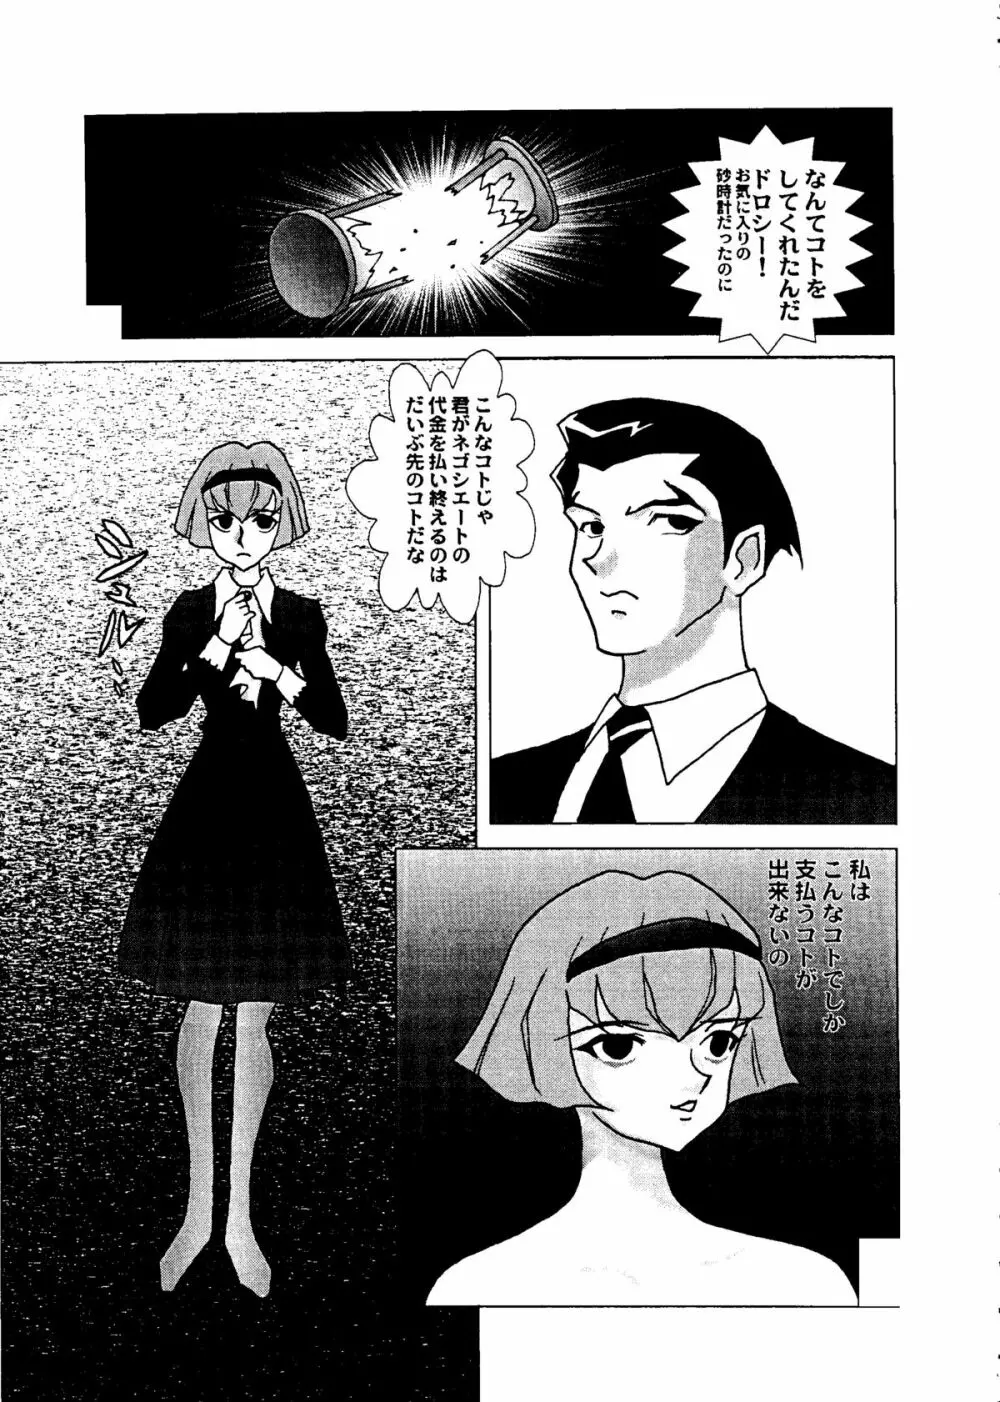 BUY or DIE おかちめんたいこ 79ページ